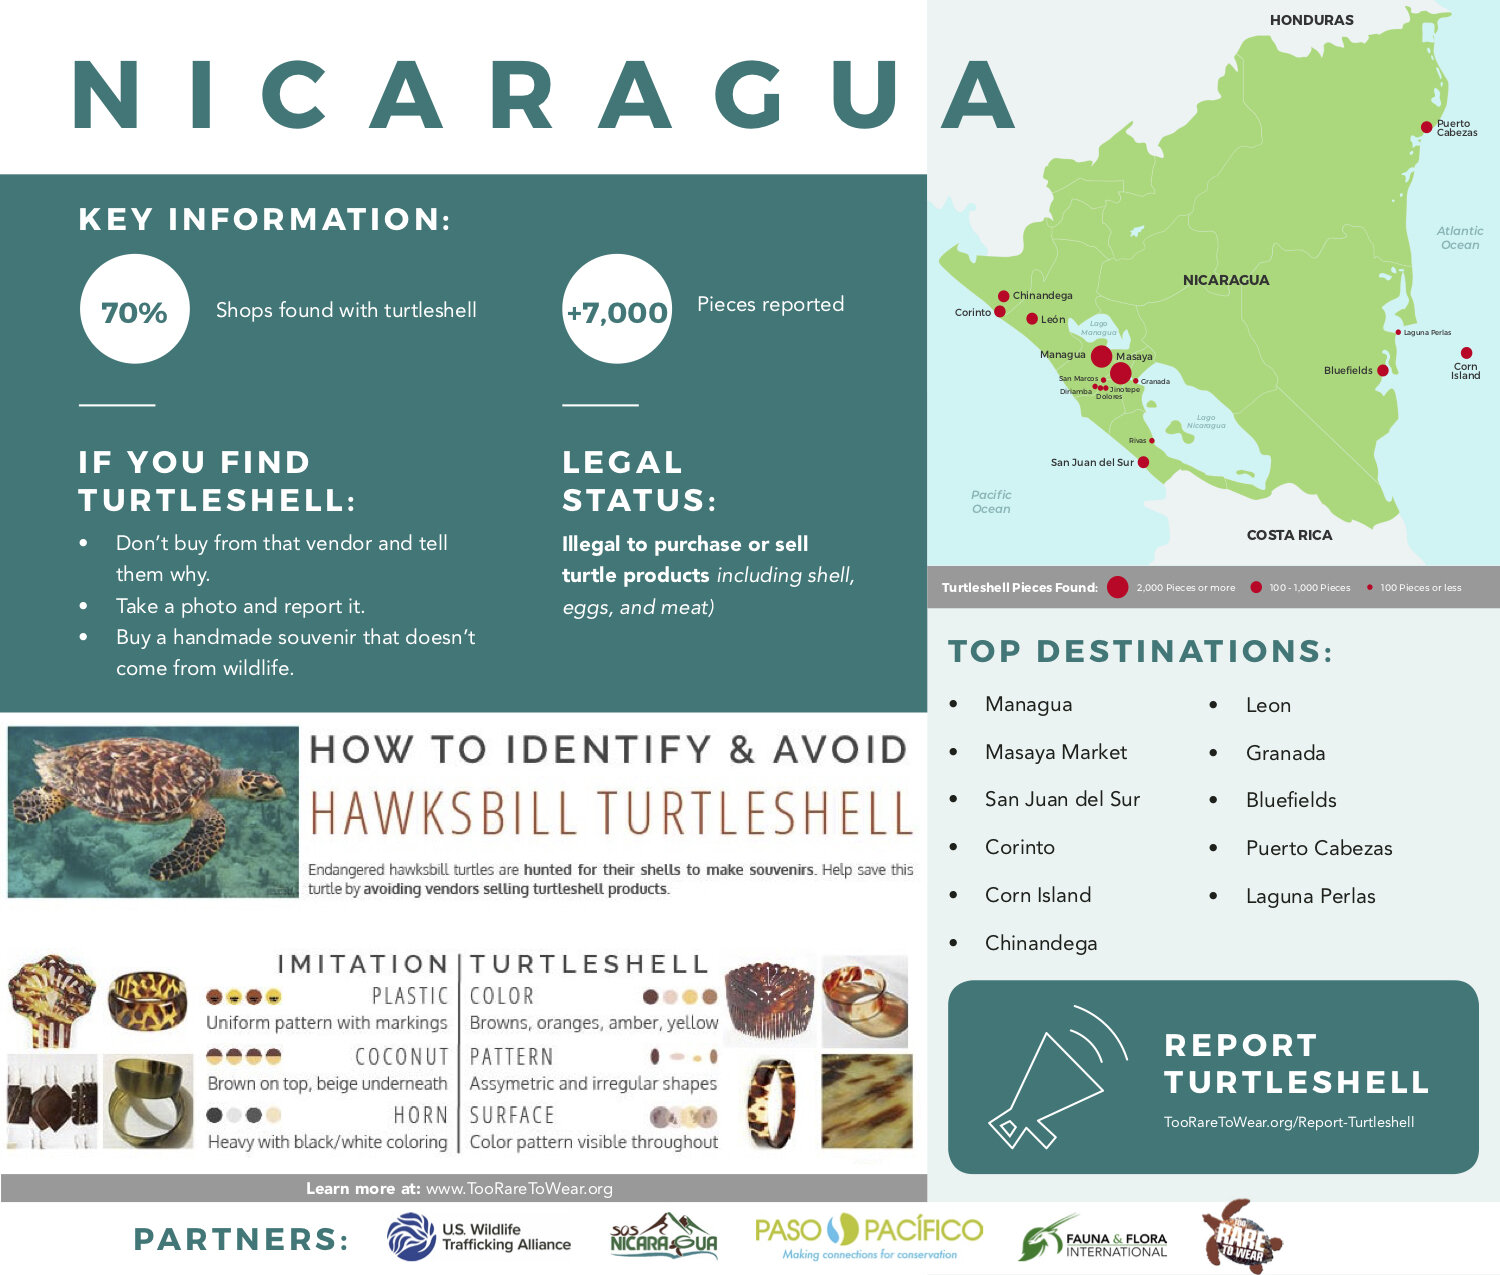 Nicaragua Destinatin Guide.jpg